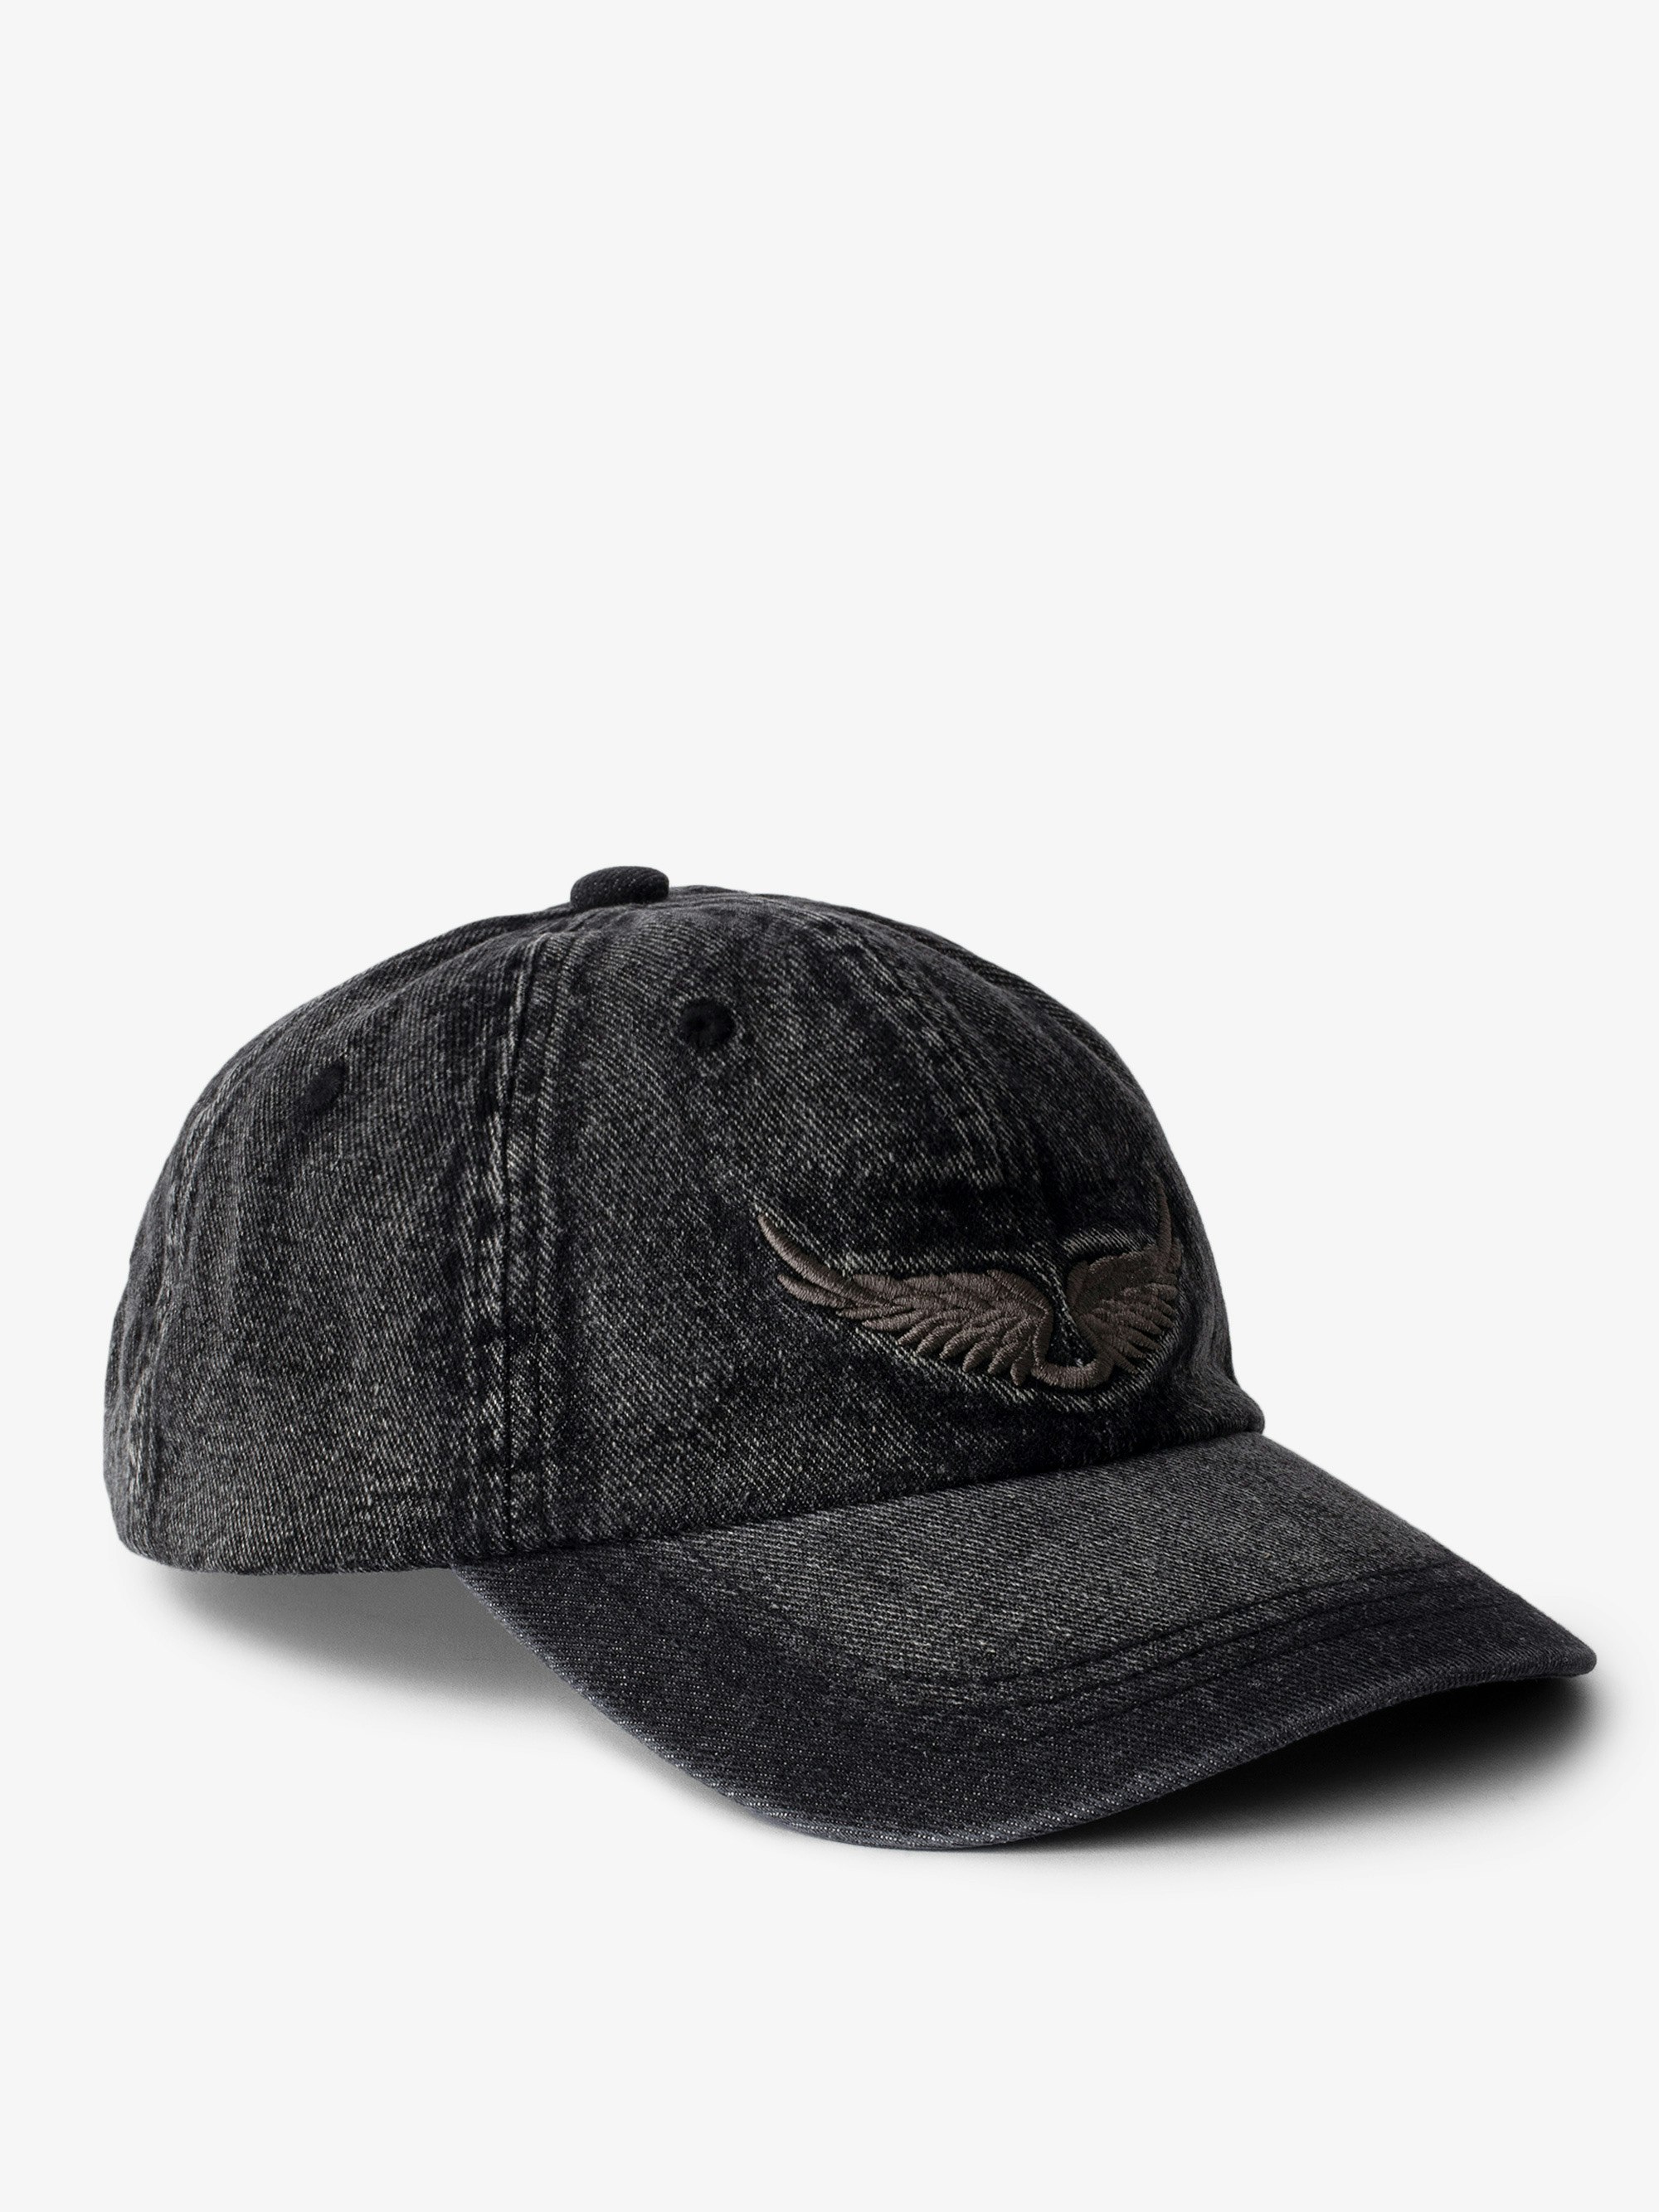 Klelia Rock Baseball Cap - Black denim baseball cap with wings embroidery.